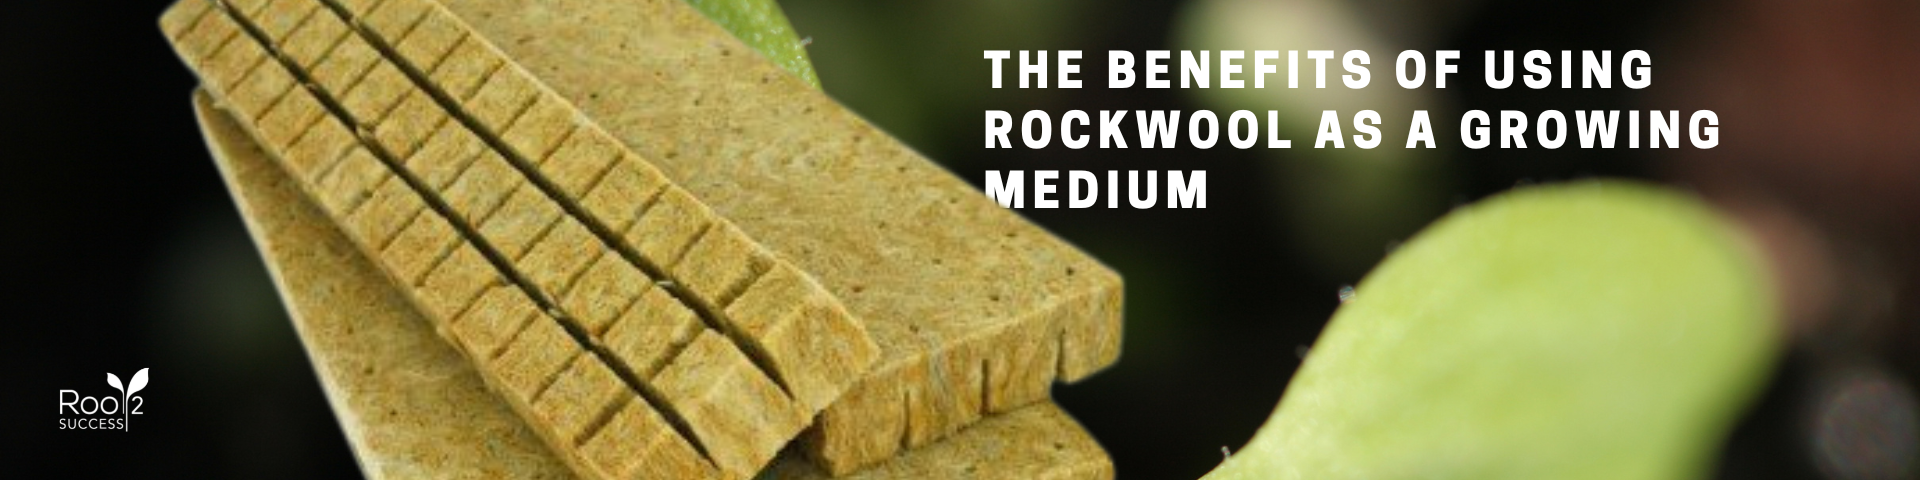 Benefits of rockwool as a growing medium